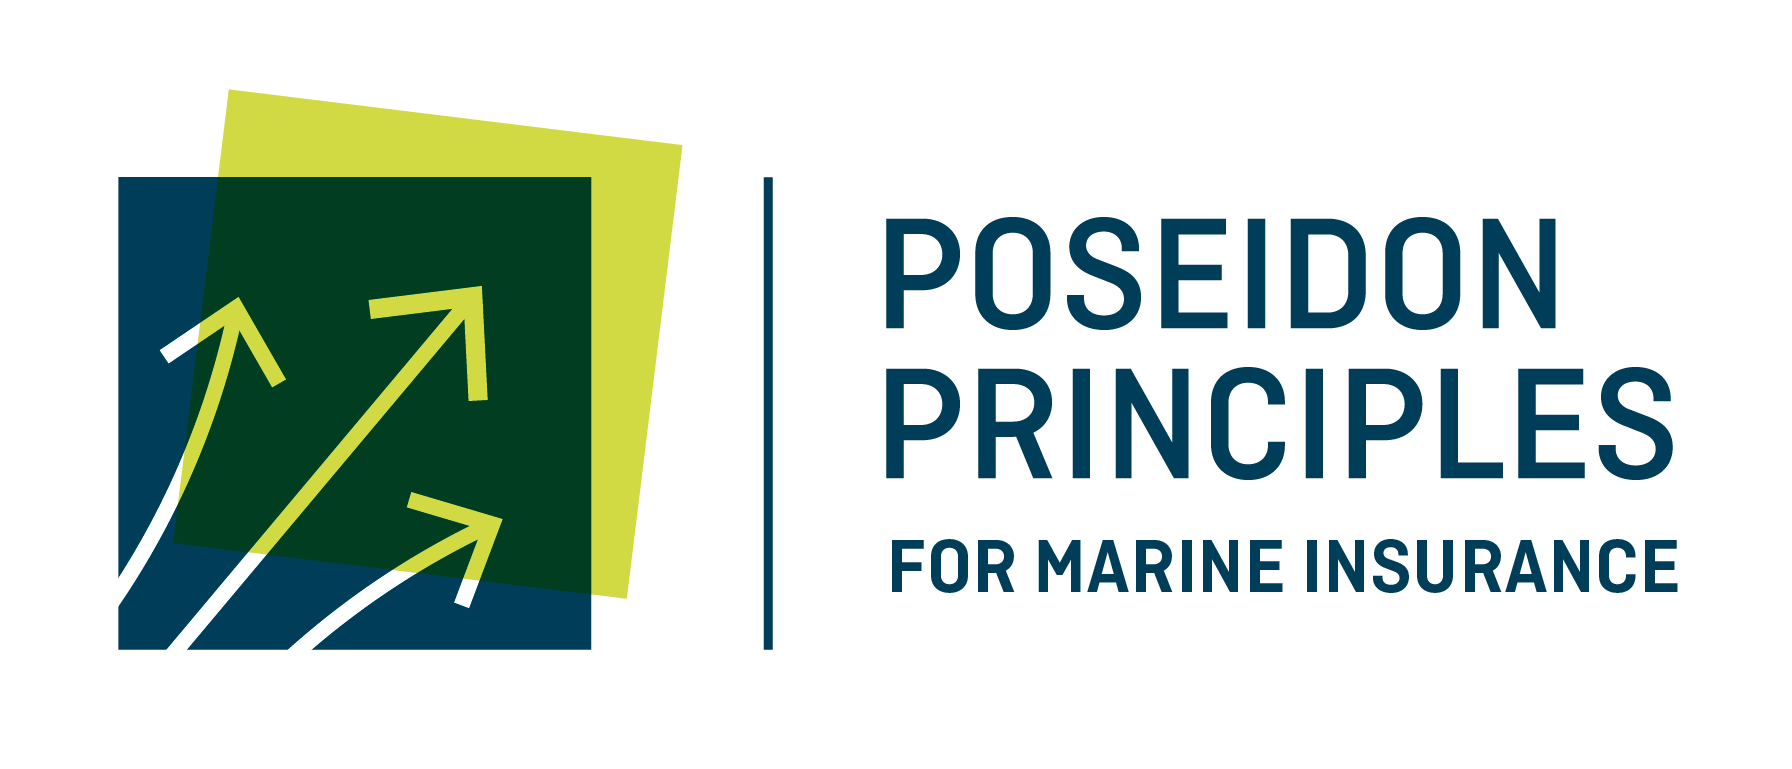 Poseidon Principles for Marine Insurance